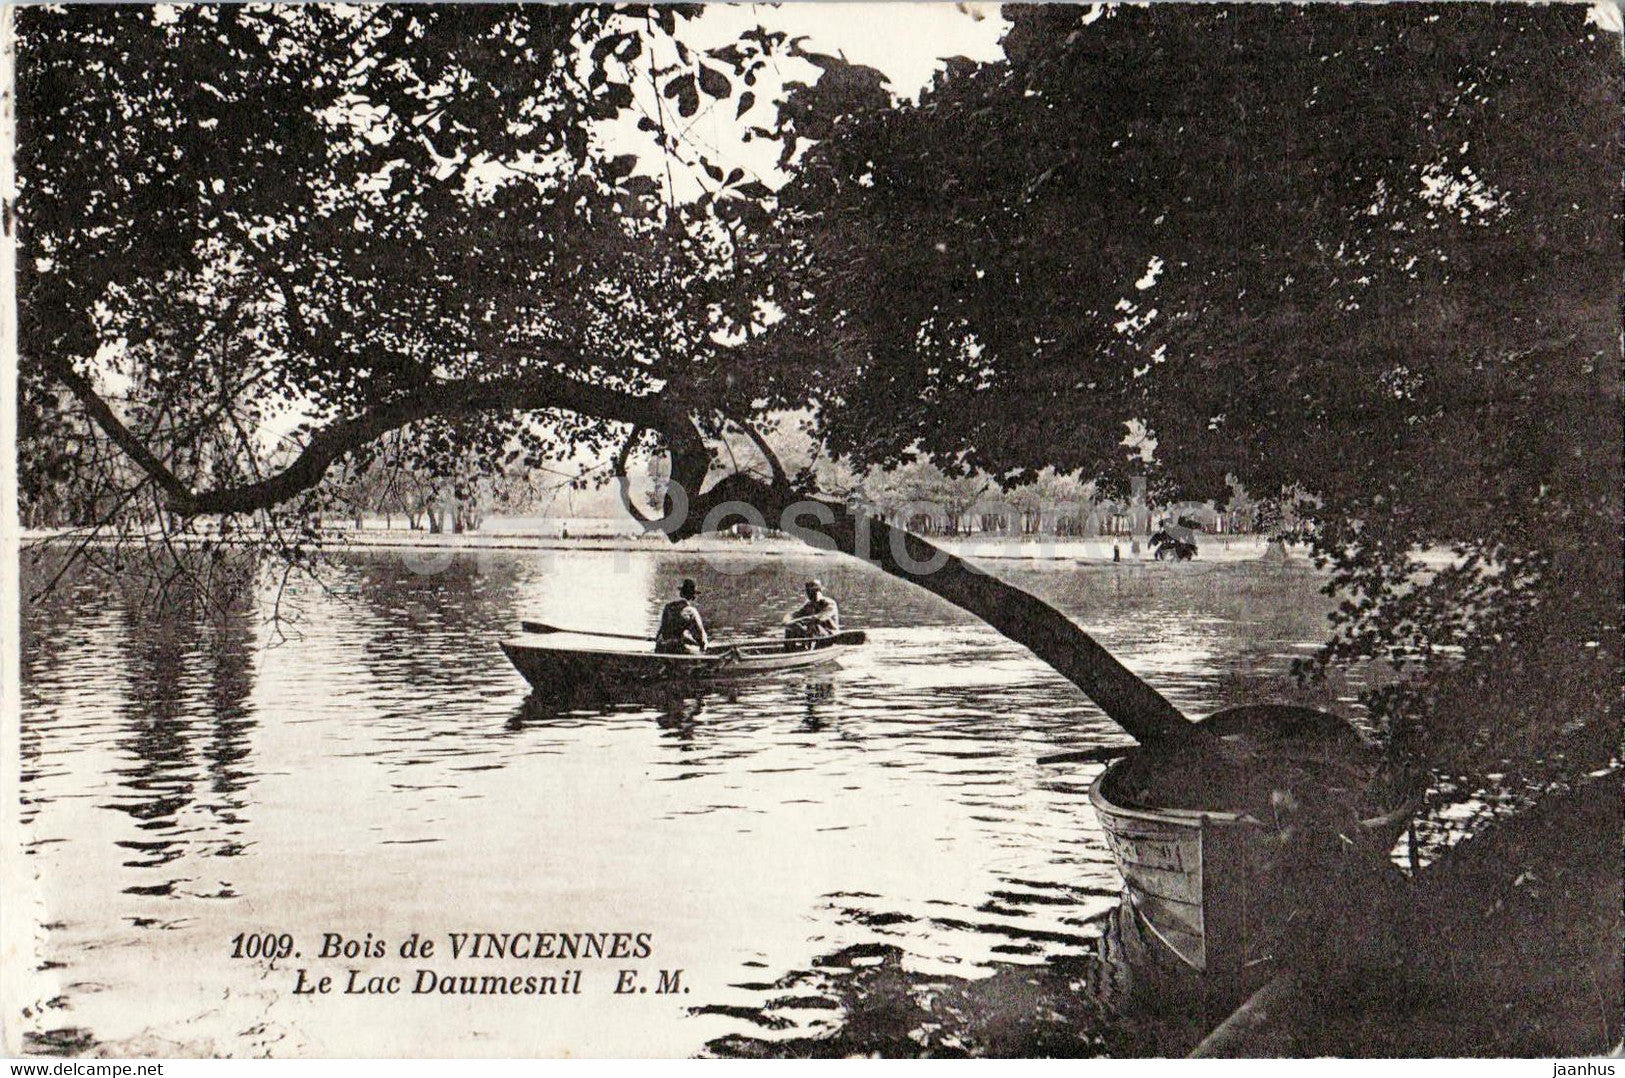 Bois de Vincennes - Le Lac Daumesnil - boat - 1009 - old postcard - France - used - JH Postcards